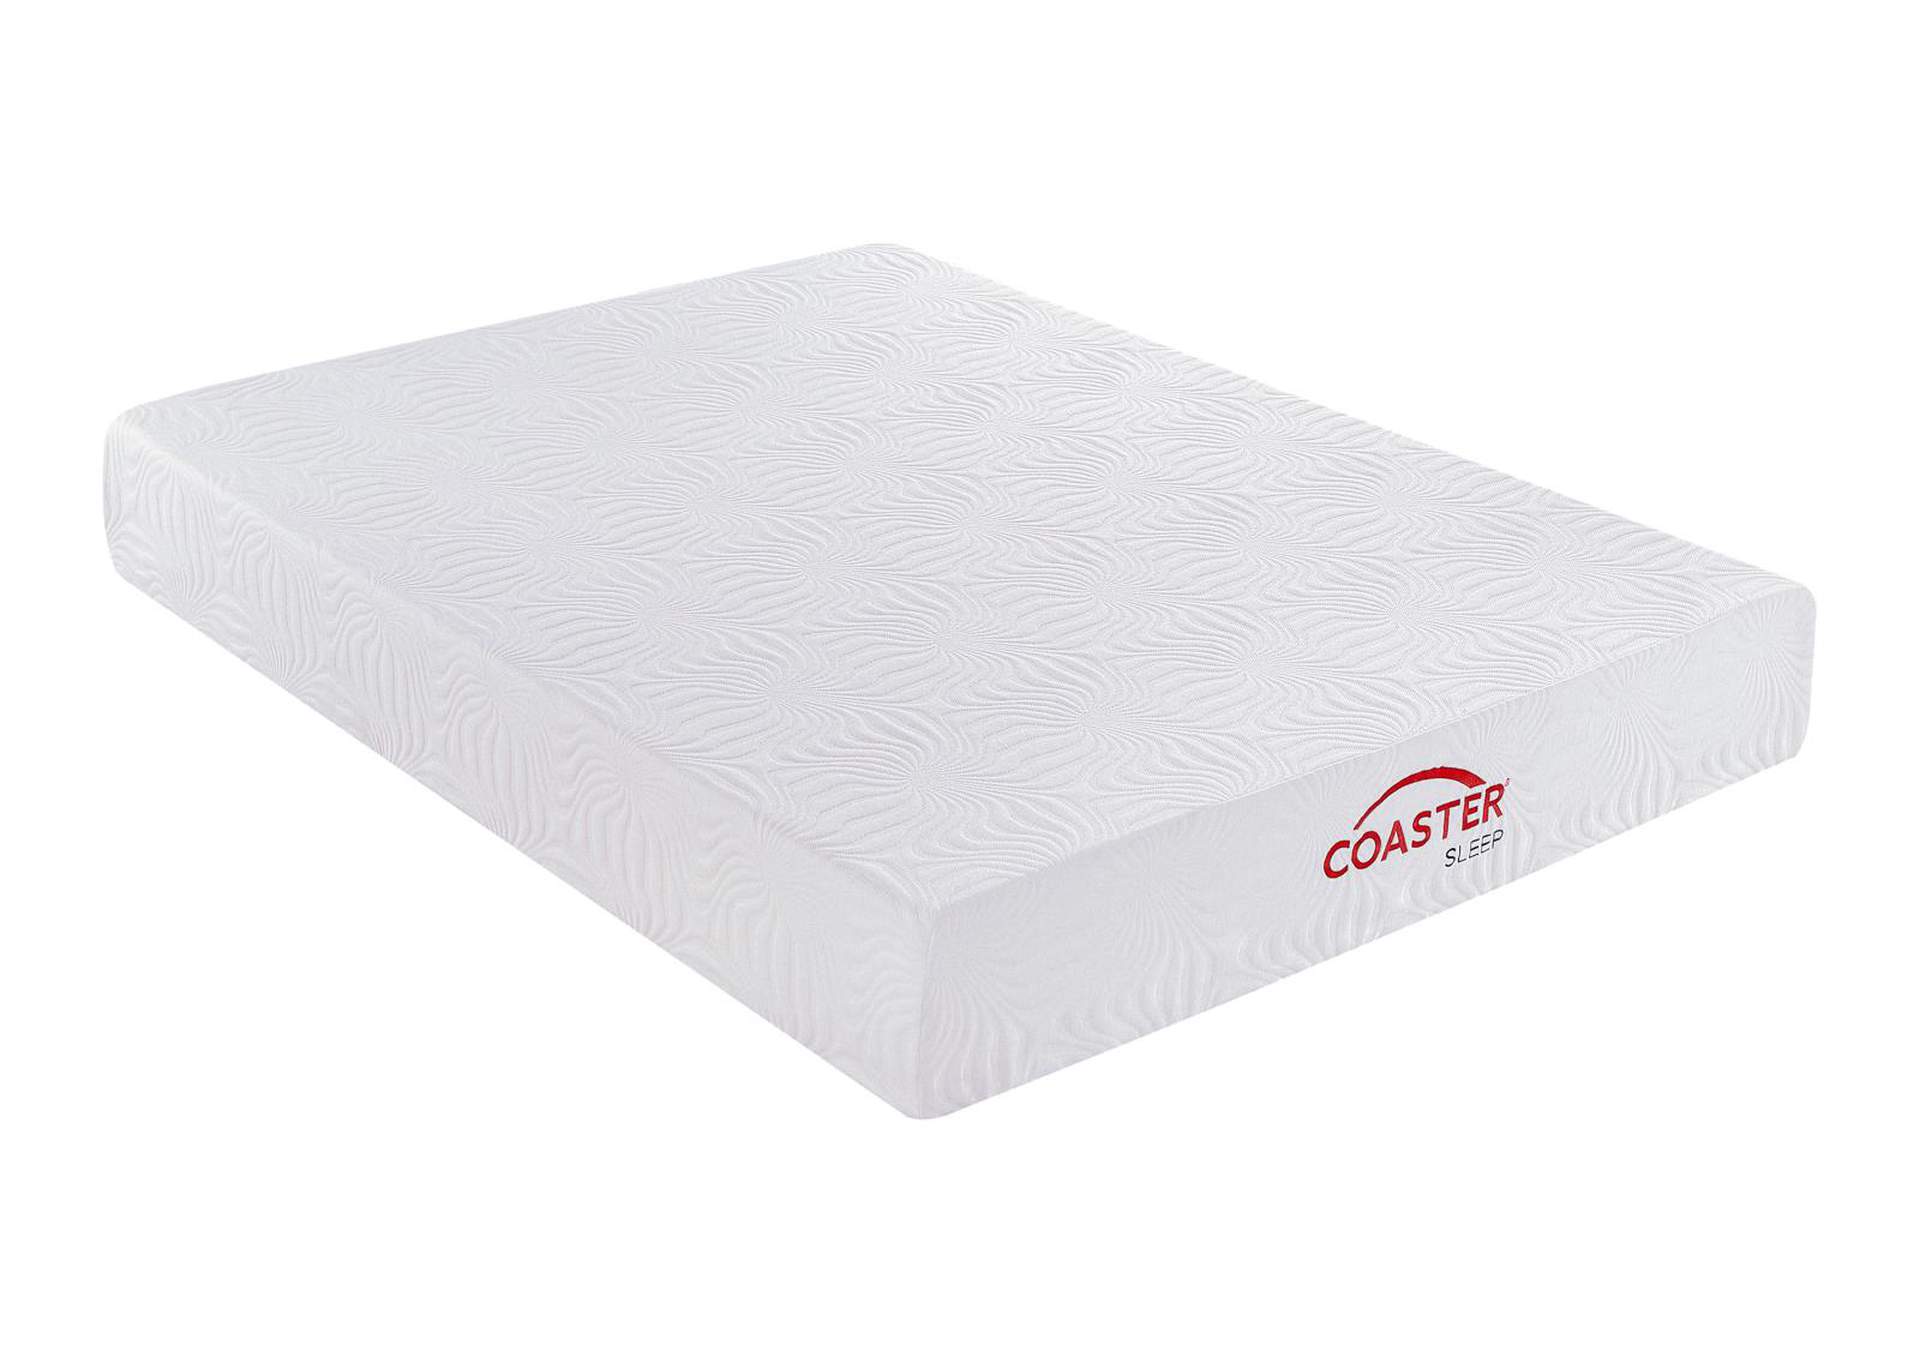 Key White 10-Inch Full Memory Foam Mattress,Coaster Furniture